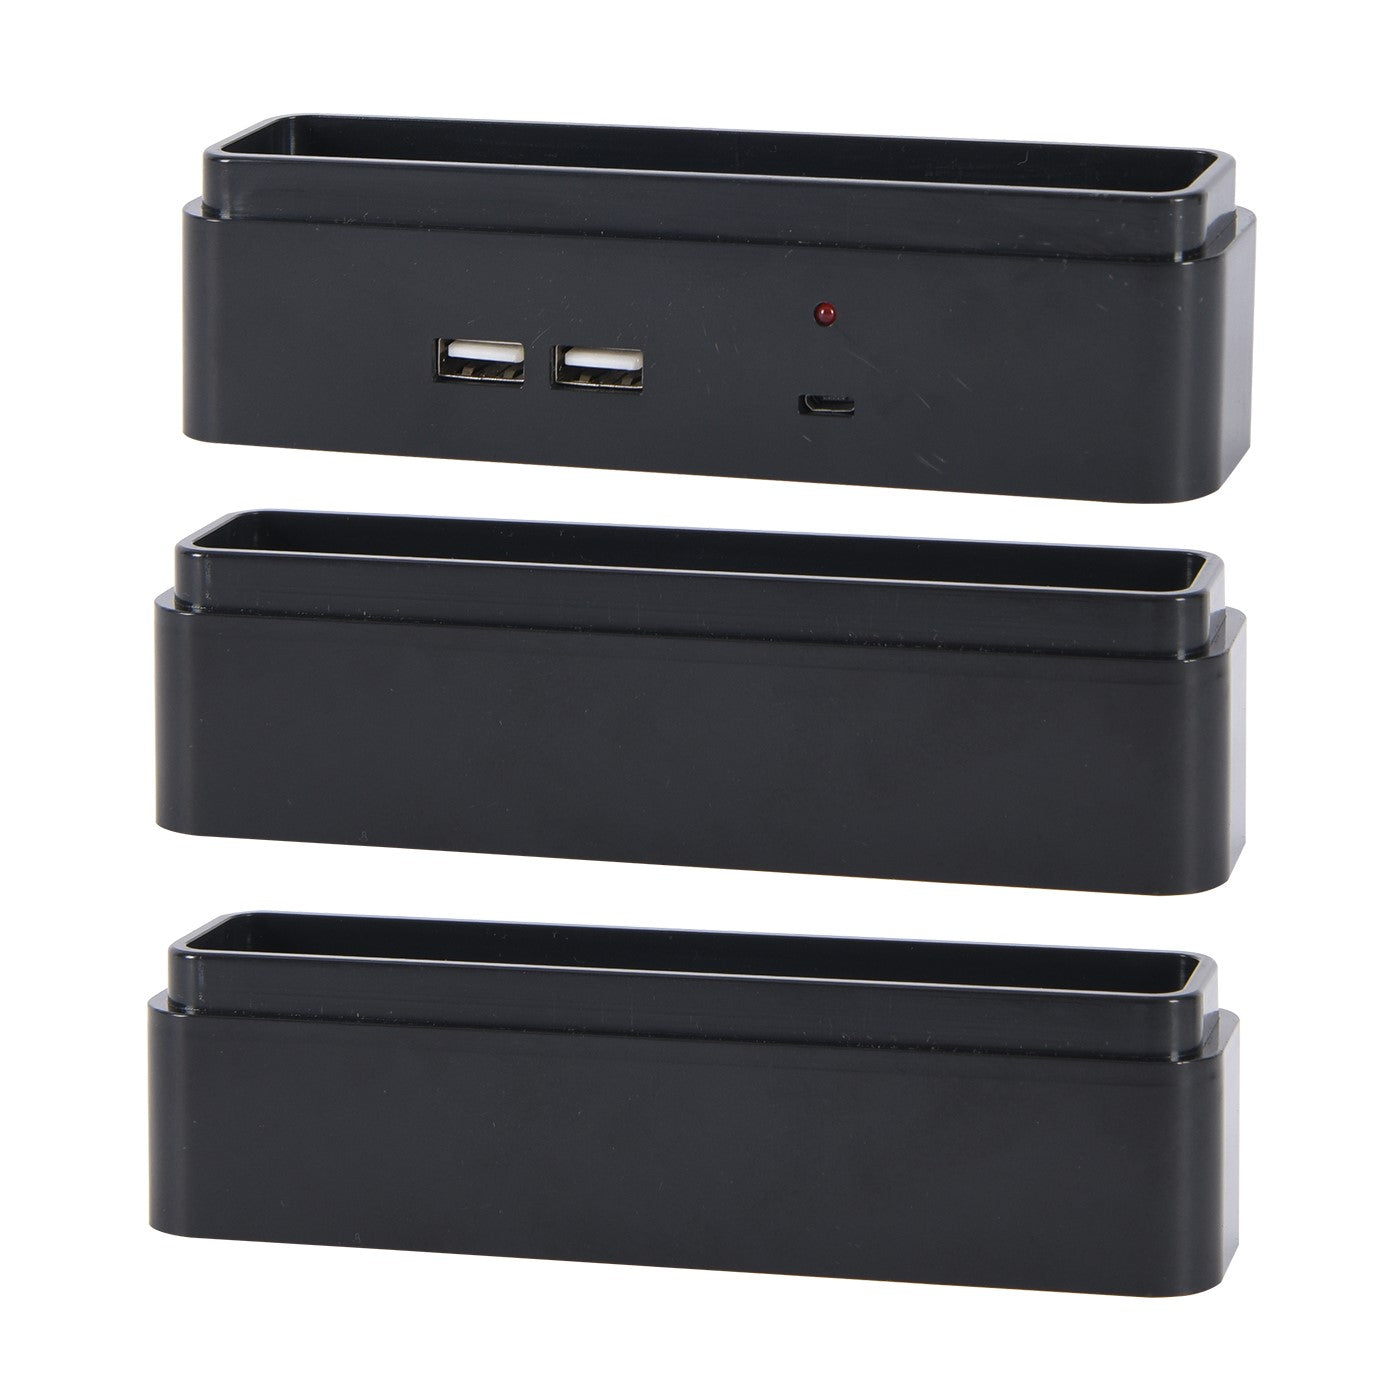 DAC® Stax MP-232 Monitor Riser Block Kit with 2 USB Charging Ports